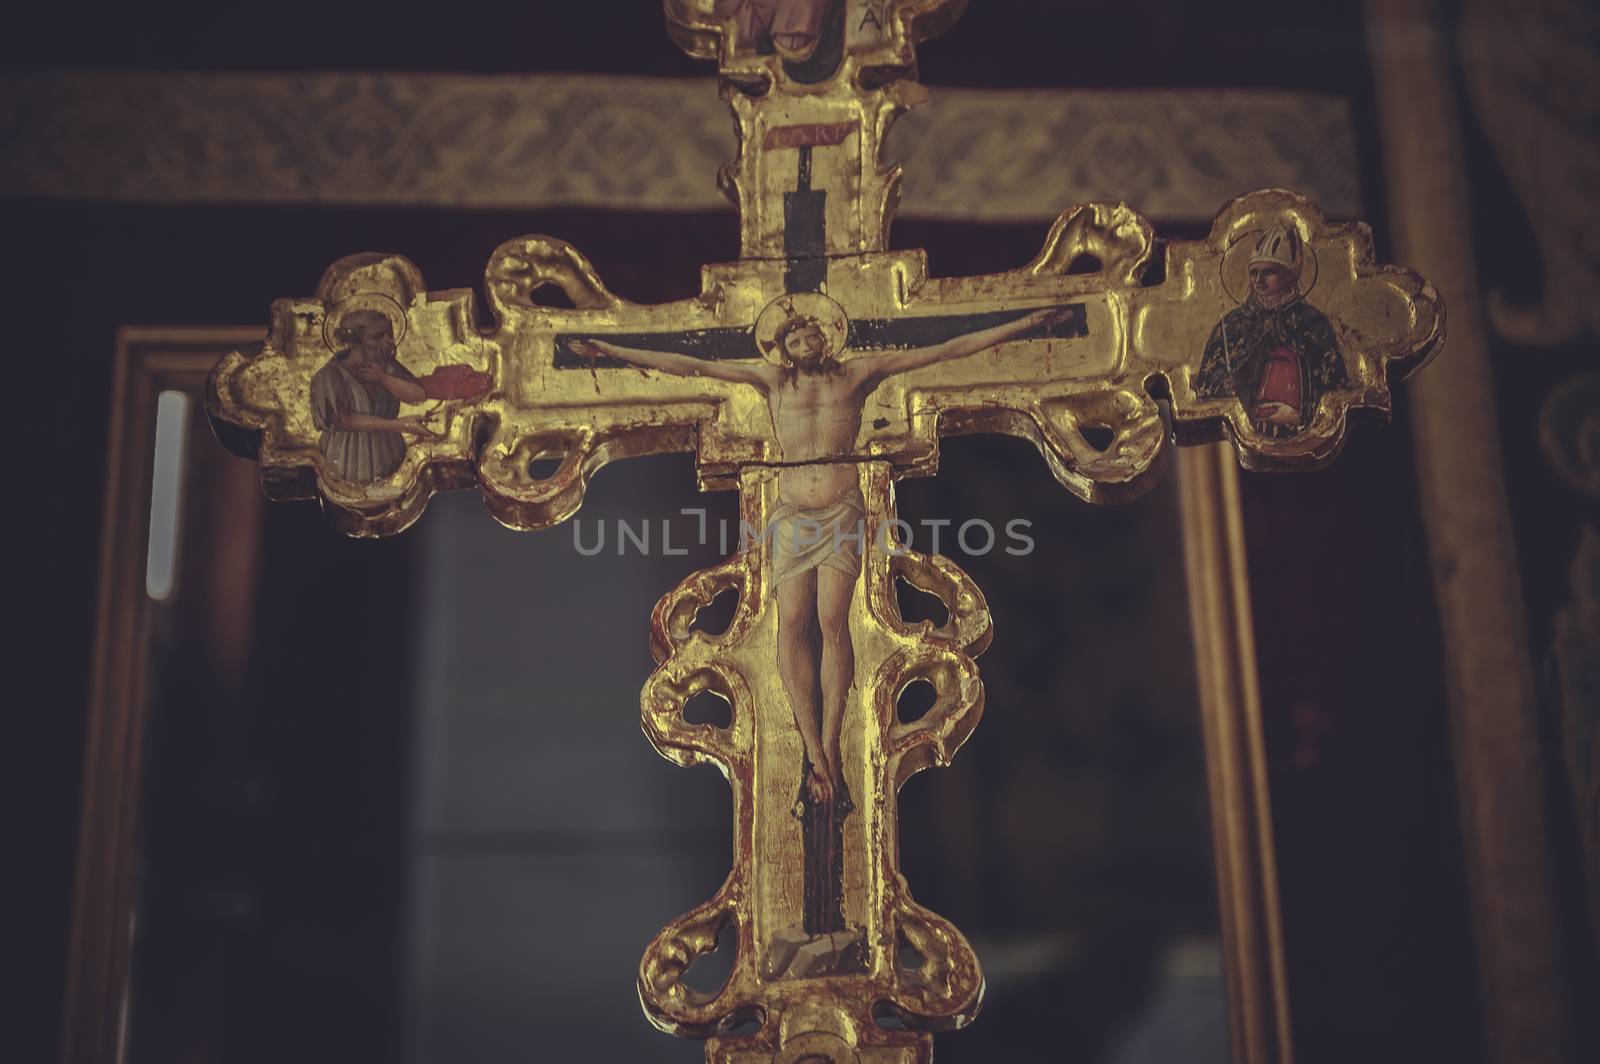 Jesus of gold and precious jewels, cross and religious symbols made ������of precious metals